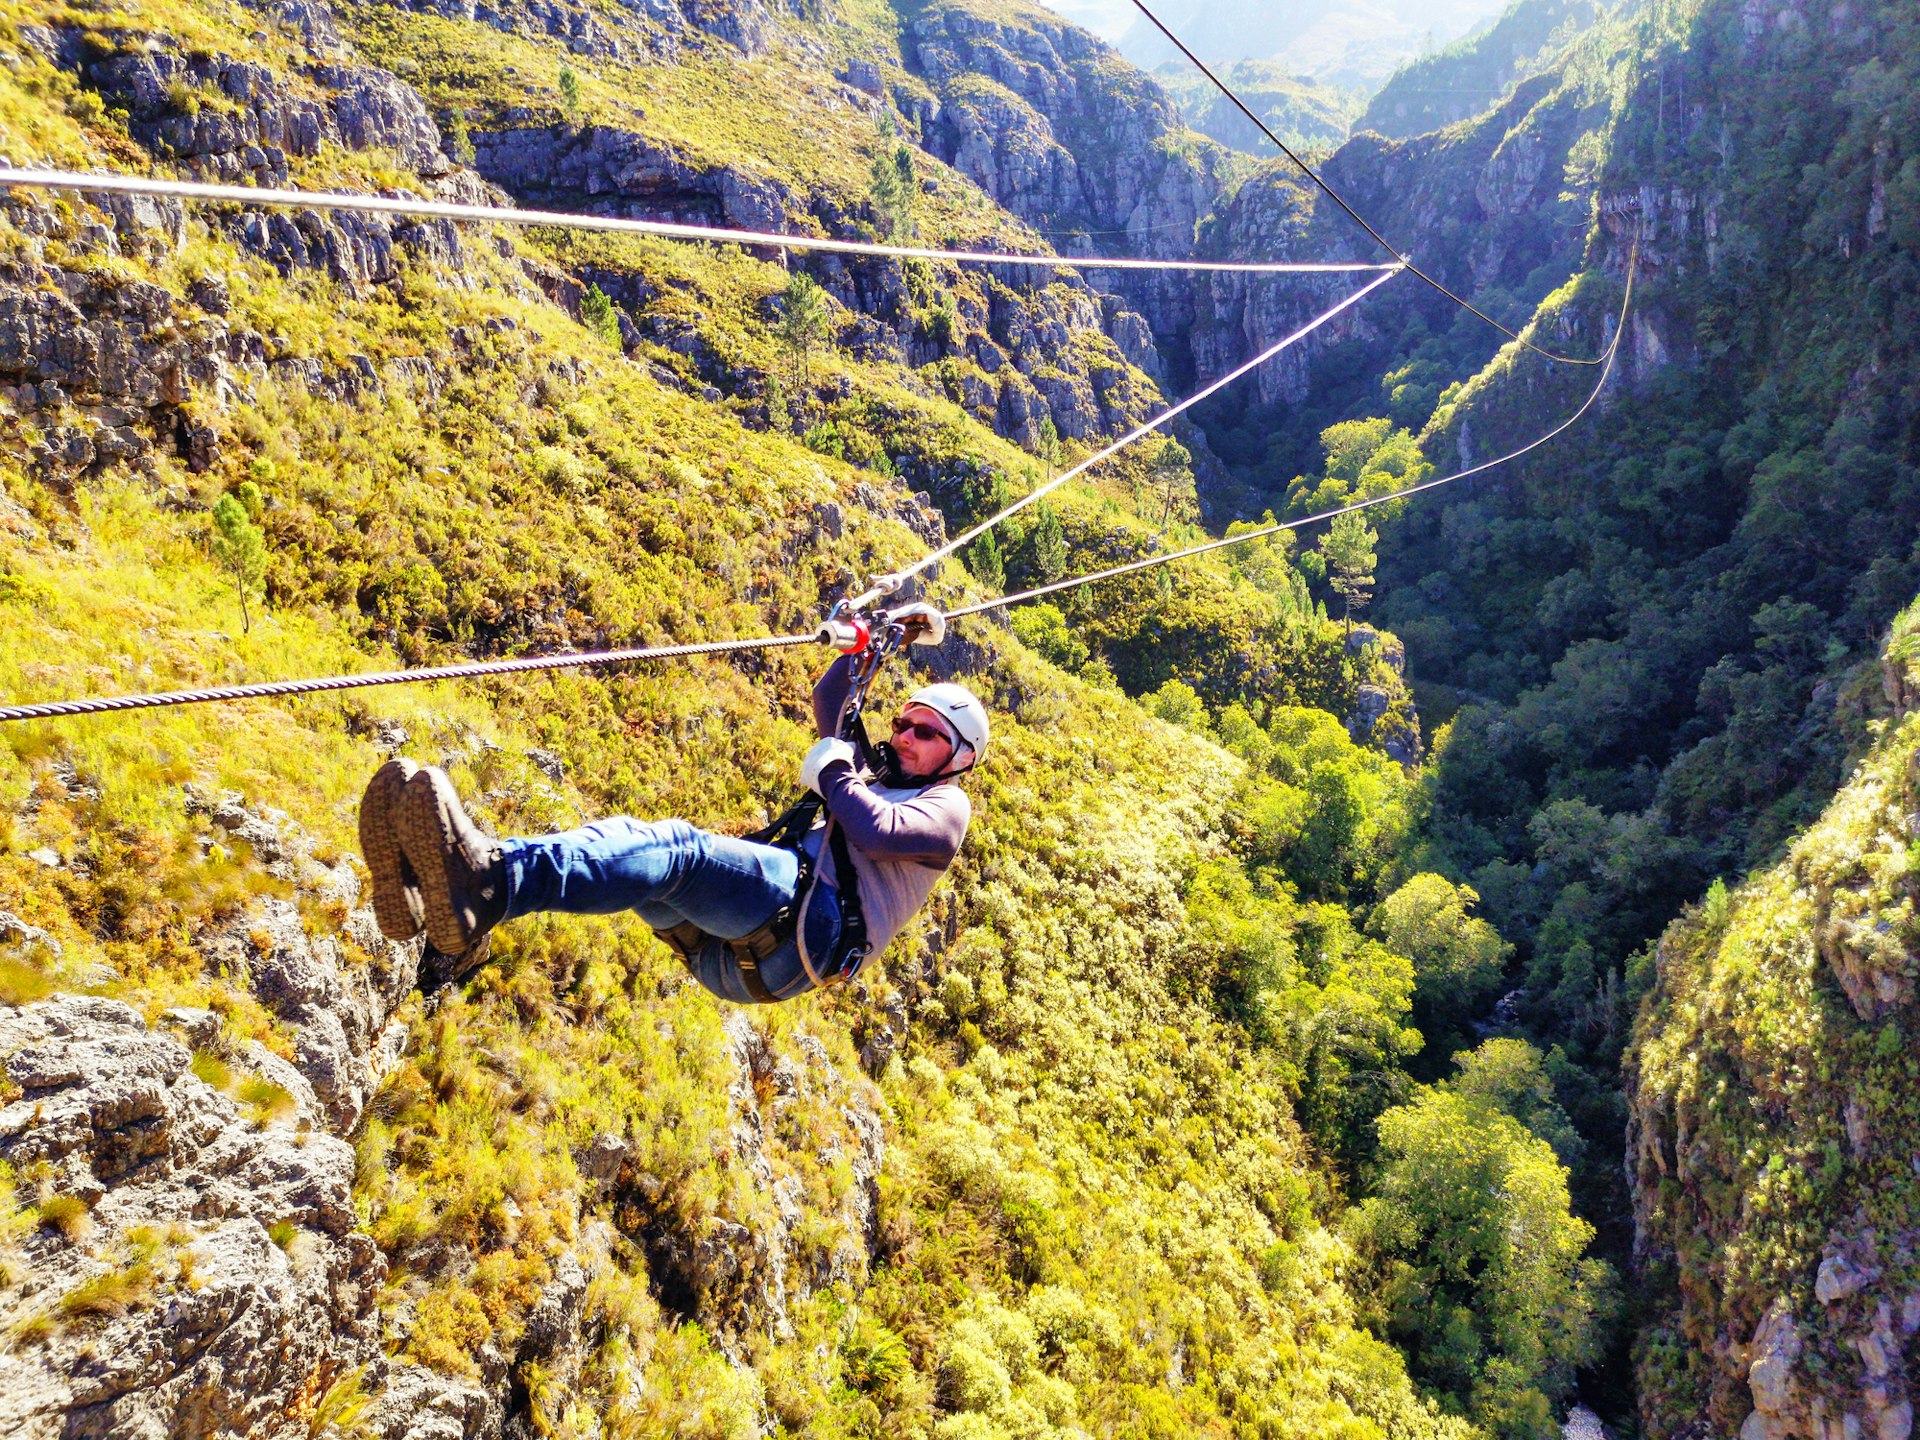 A man in safety gear slides along a zipline through a canyon